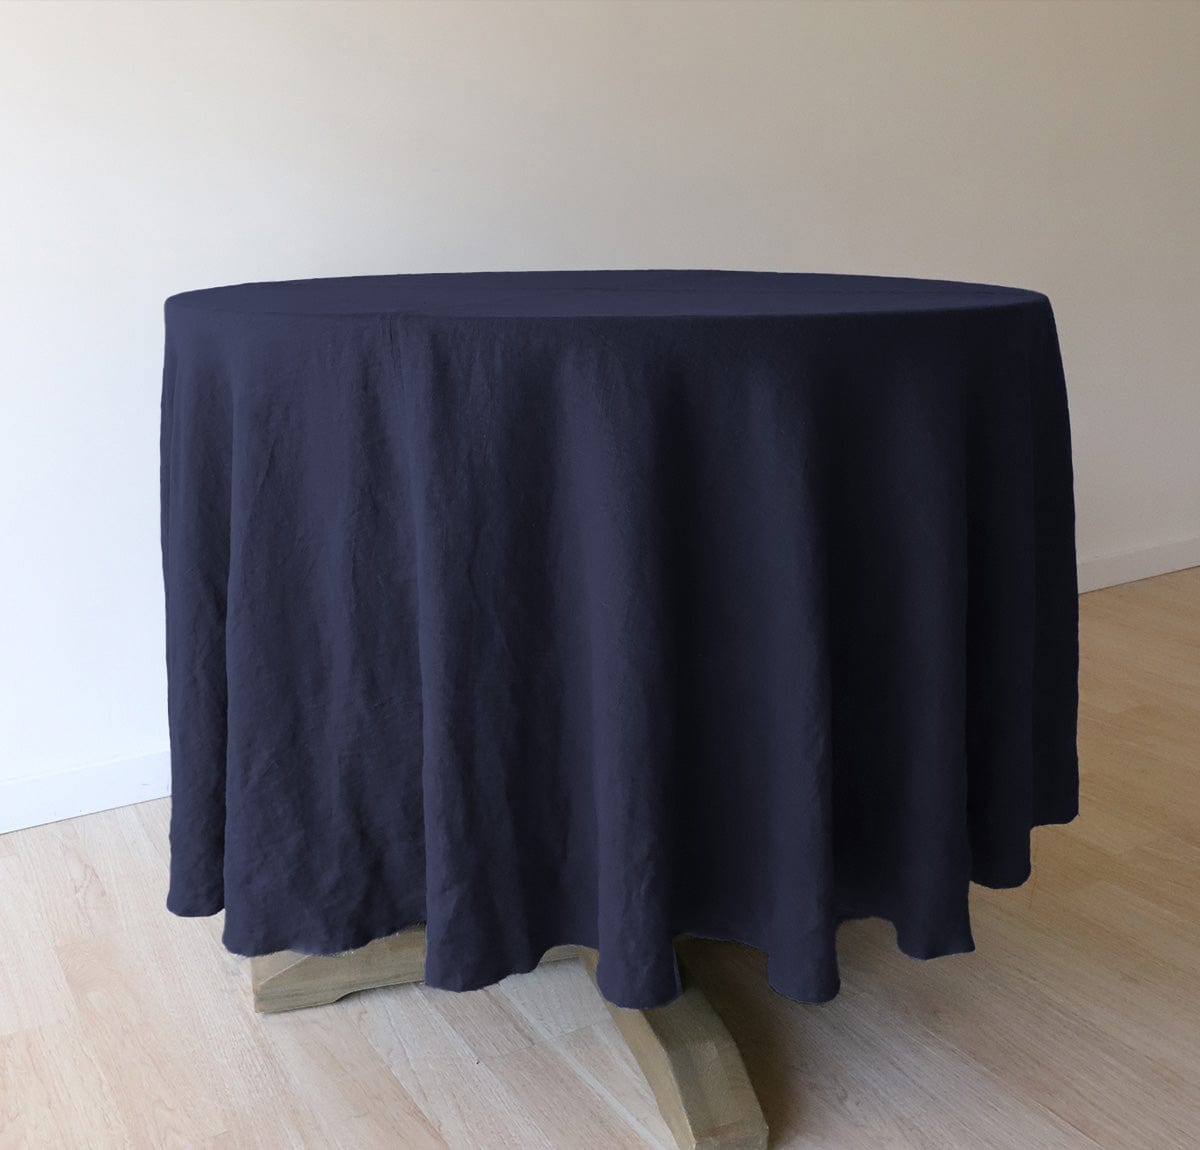 Rough Linen | 72 x 118 Smooth Linen Tablecloth | Pure White